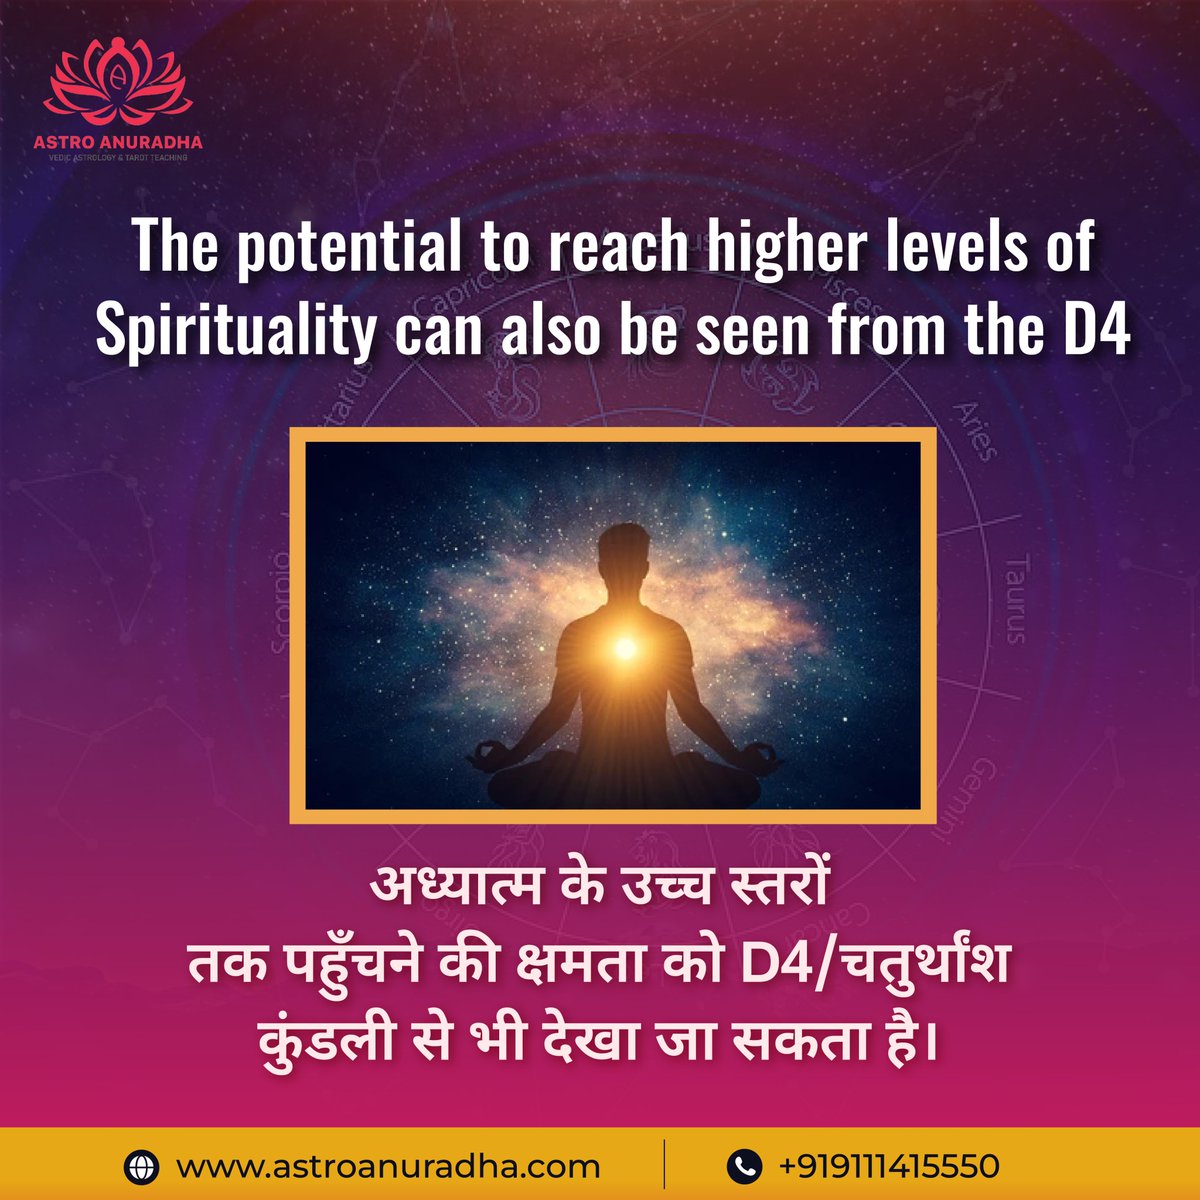 The potential to reach higher levels of Spirituality can also be seen from the D 4
अध्यात्म के उच्च स्तरों तक पहुंचने की क्षमता को D 4/चतुर्थांश कुंडली से भी देखा जा सकता है
#astrology #anuradha #divisionalcharts #chaturthansha #d4 #spirituality 

website astroanuradha.com